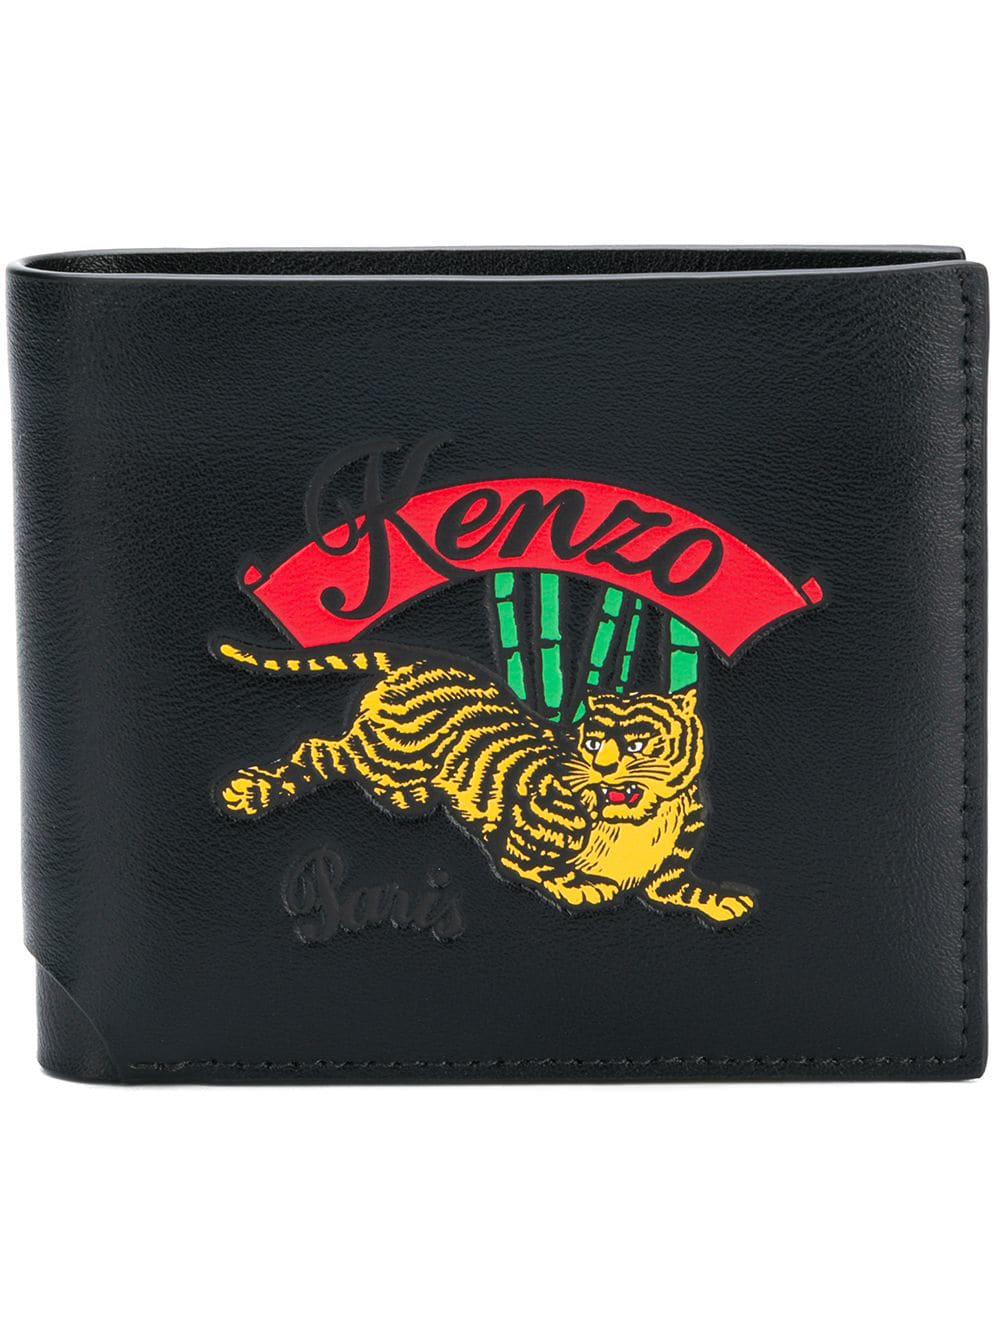 KENZO Leather Wallet in Black for Men - Lyst